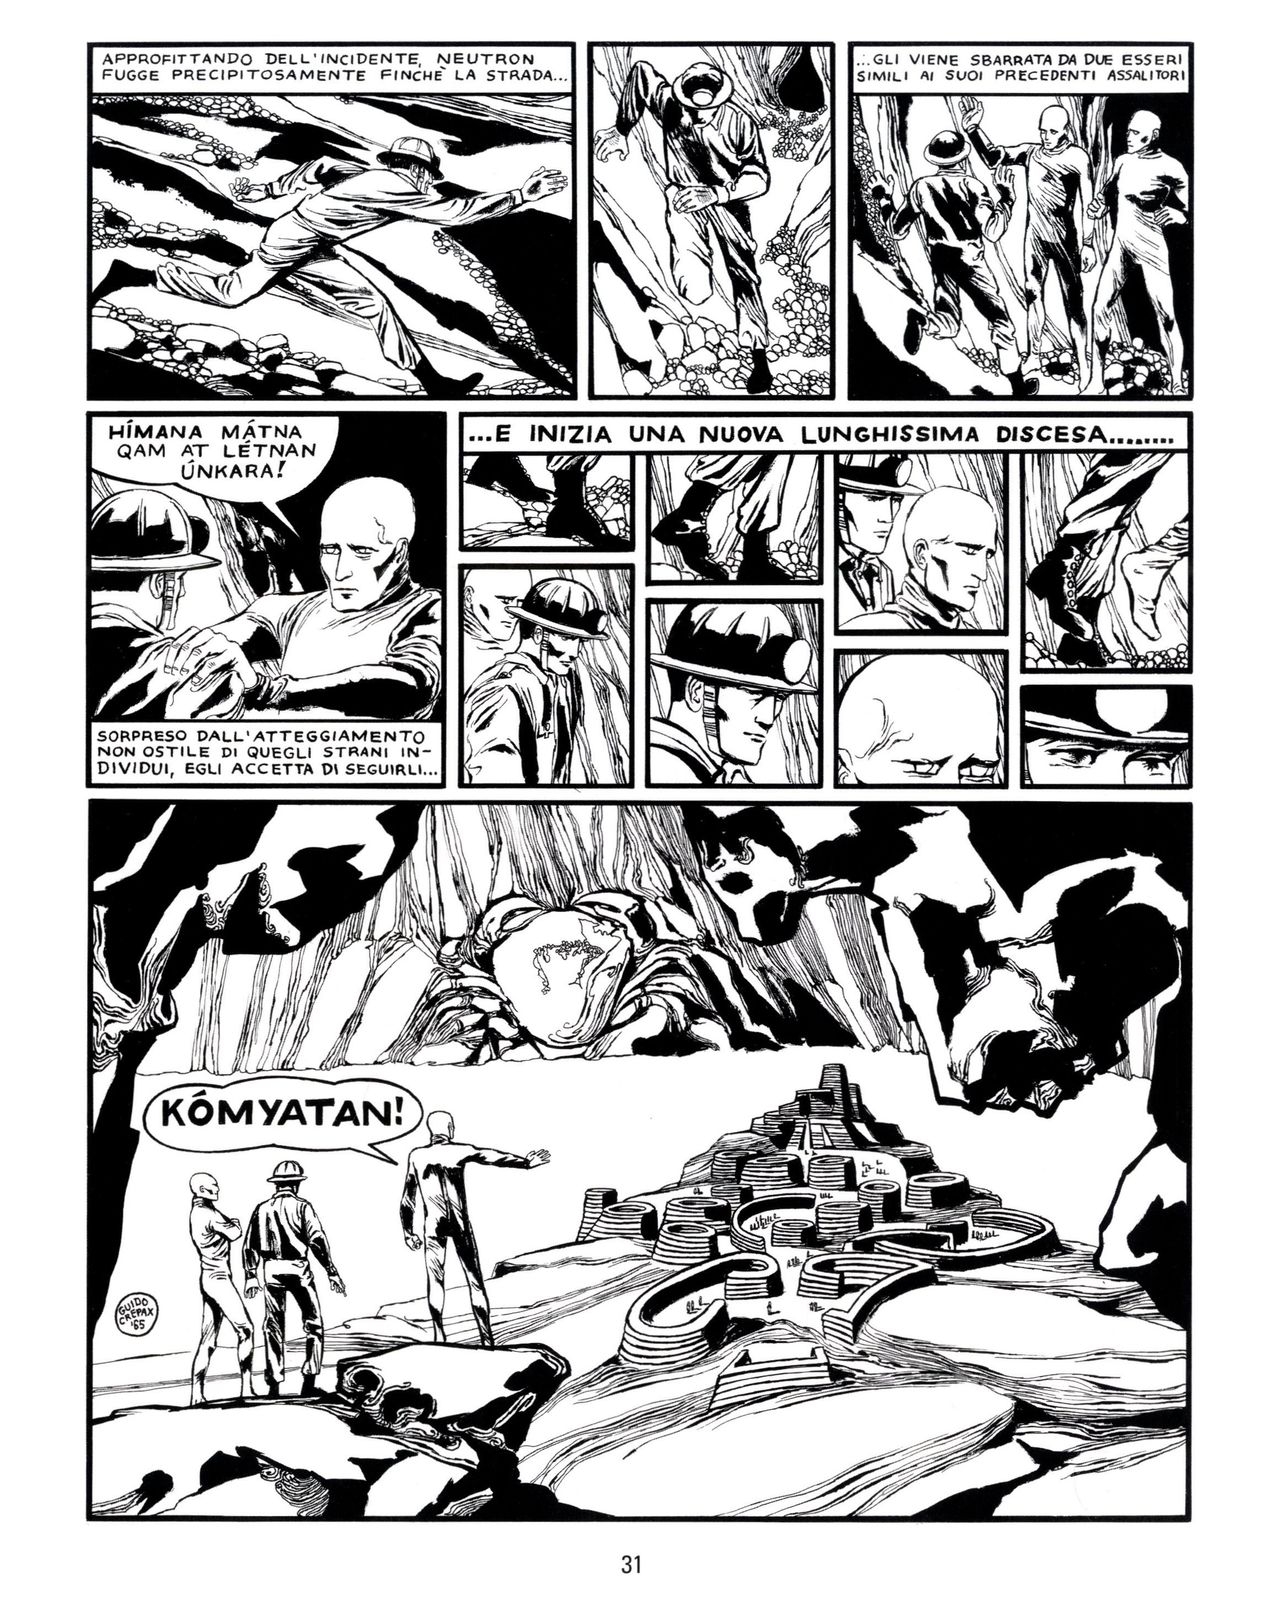 [Guido Crepax] Erotica Fumetti #25 : L'ascesa dei sotterranei : I cavalieri ciechi [Italian] 32